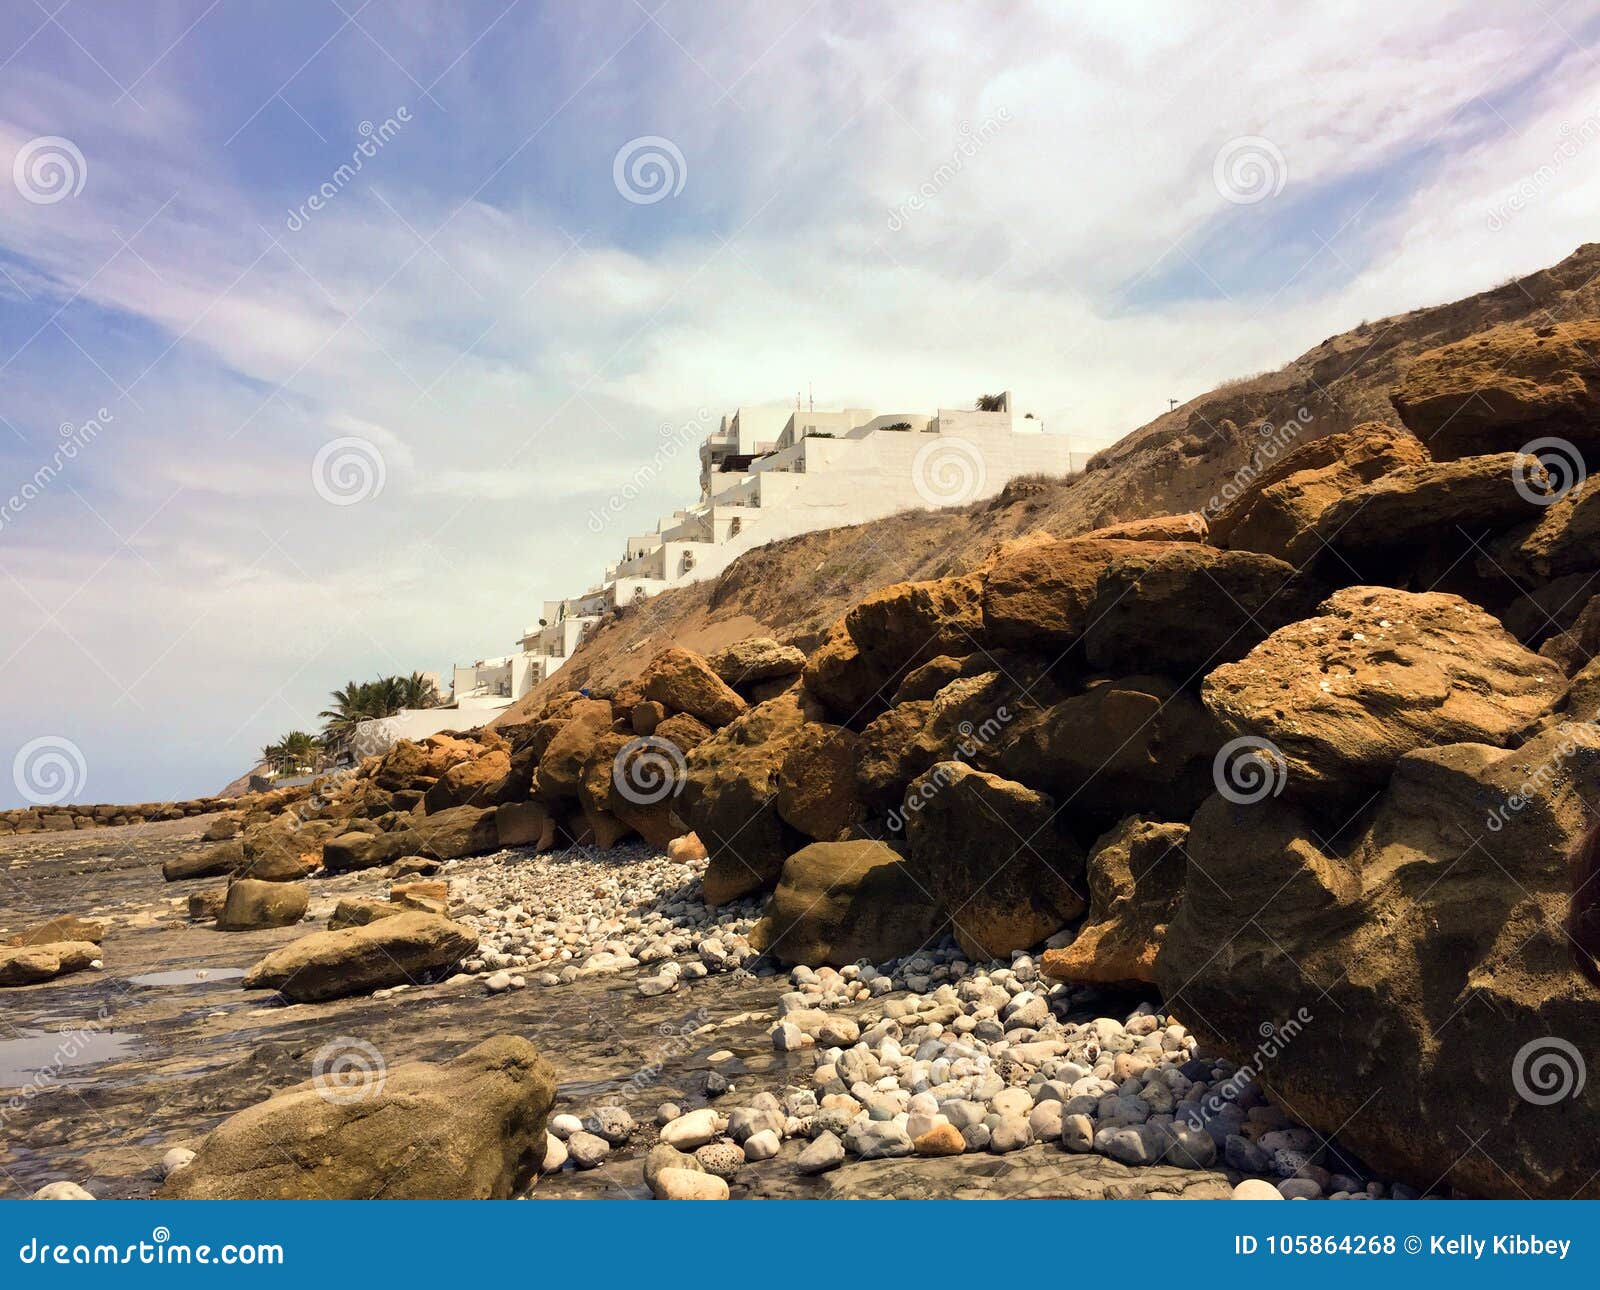 piedra larga beach condos on rocky coast of ecuador